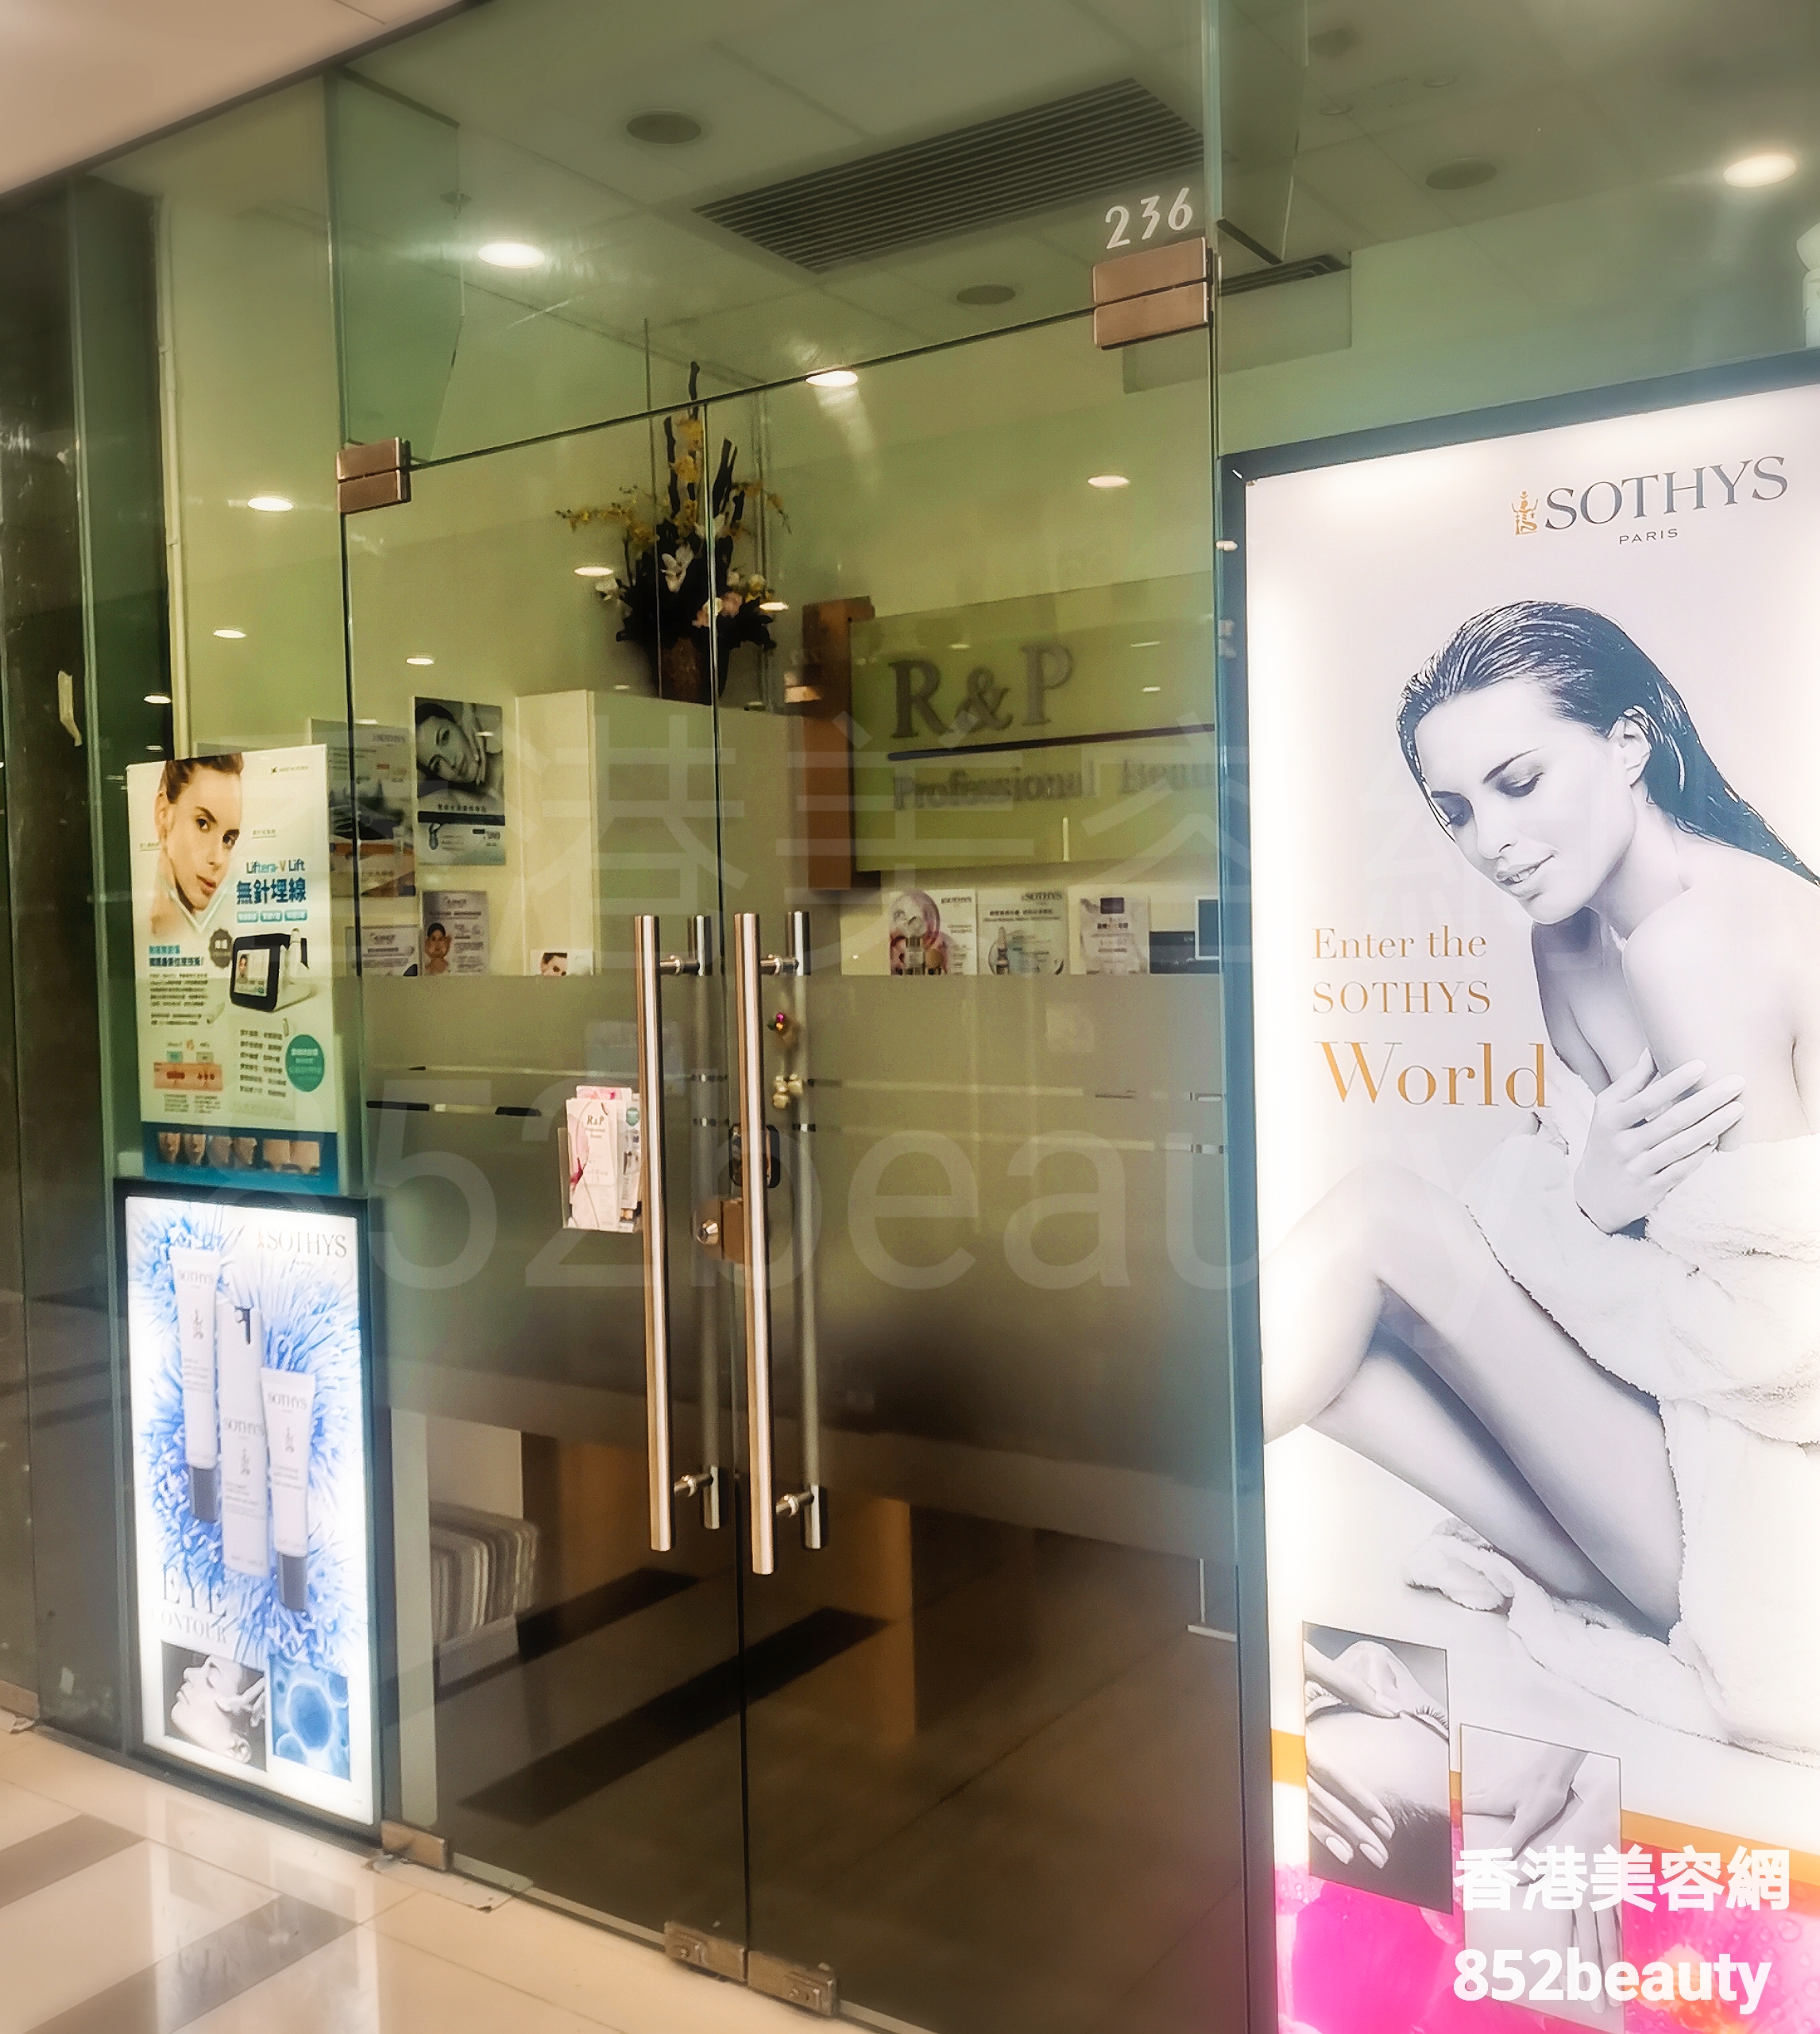 美容院 Beauty Salon: R&P Professional Beauty (沙田店)